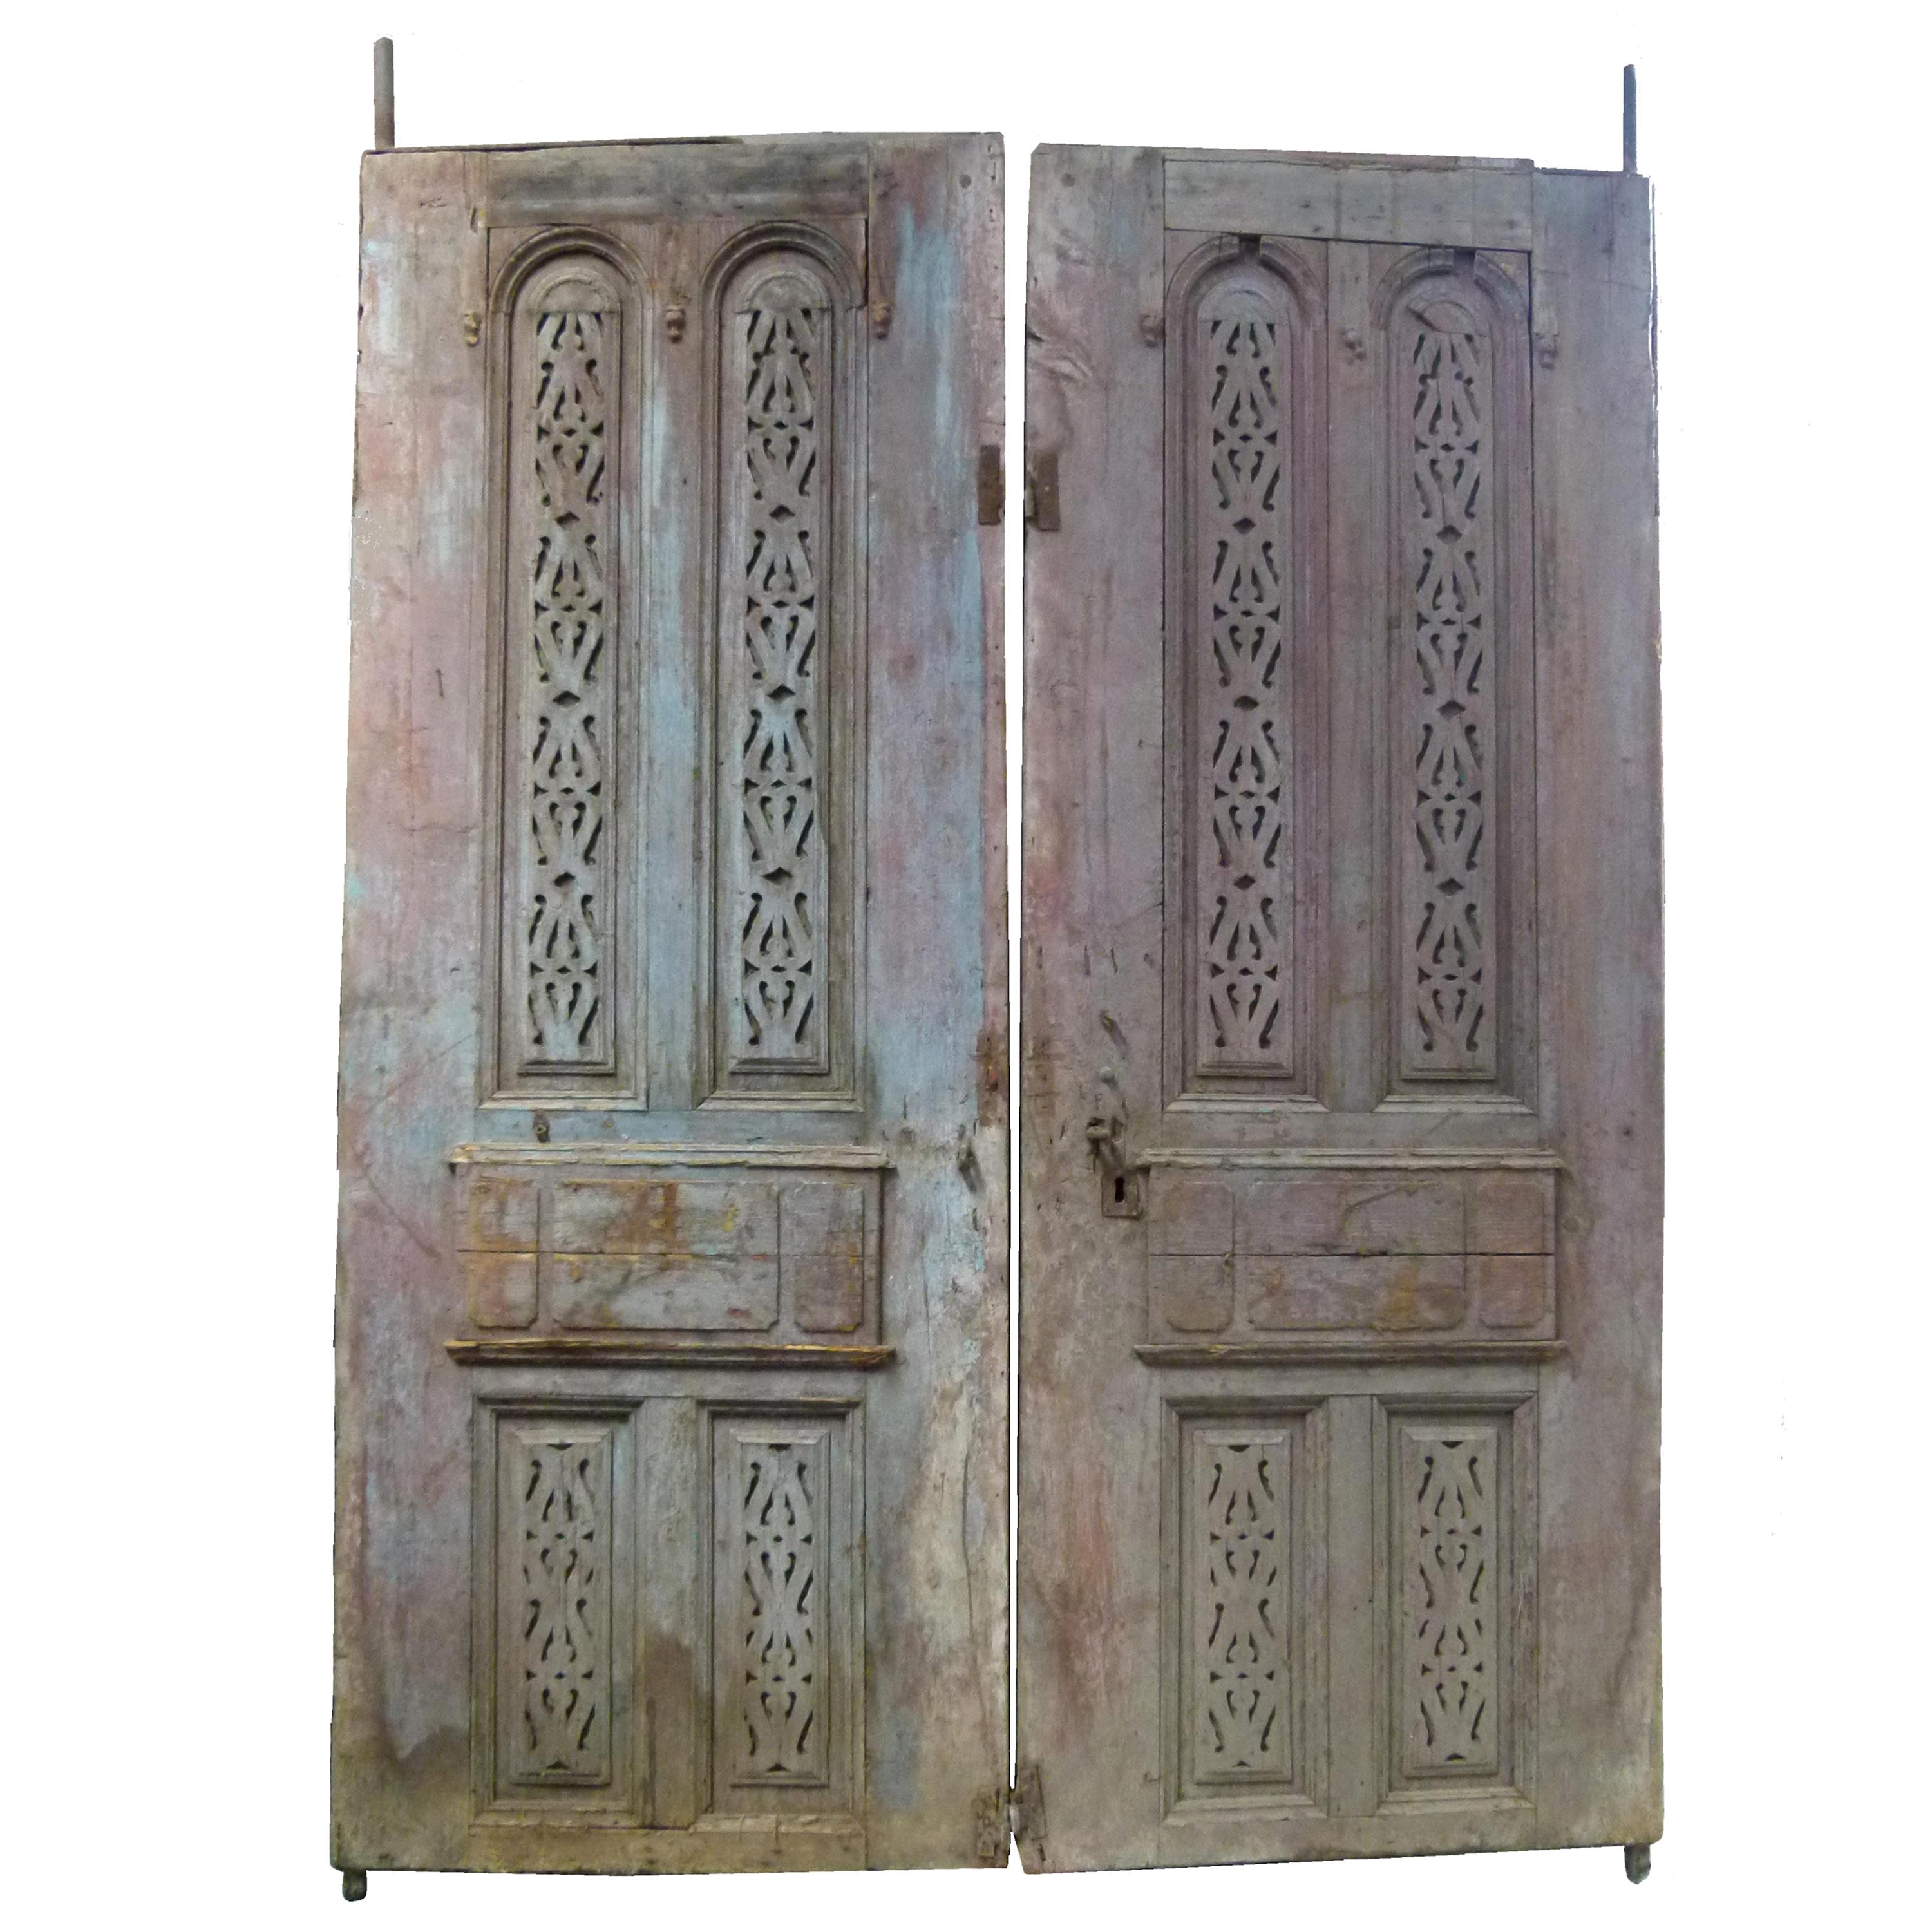 Wooden Double Door Portal in Art Nouveau Style, Spain